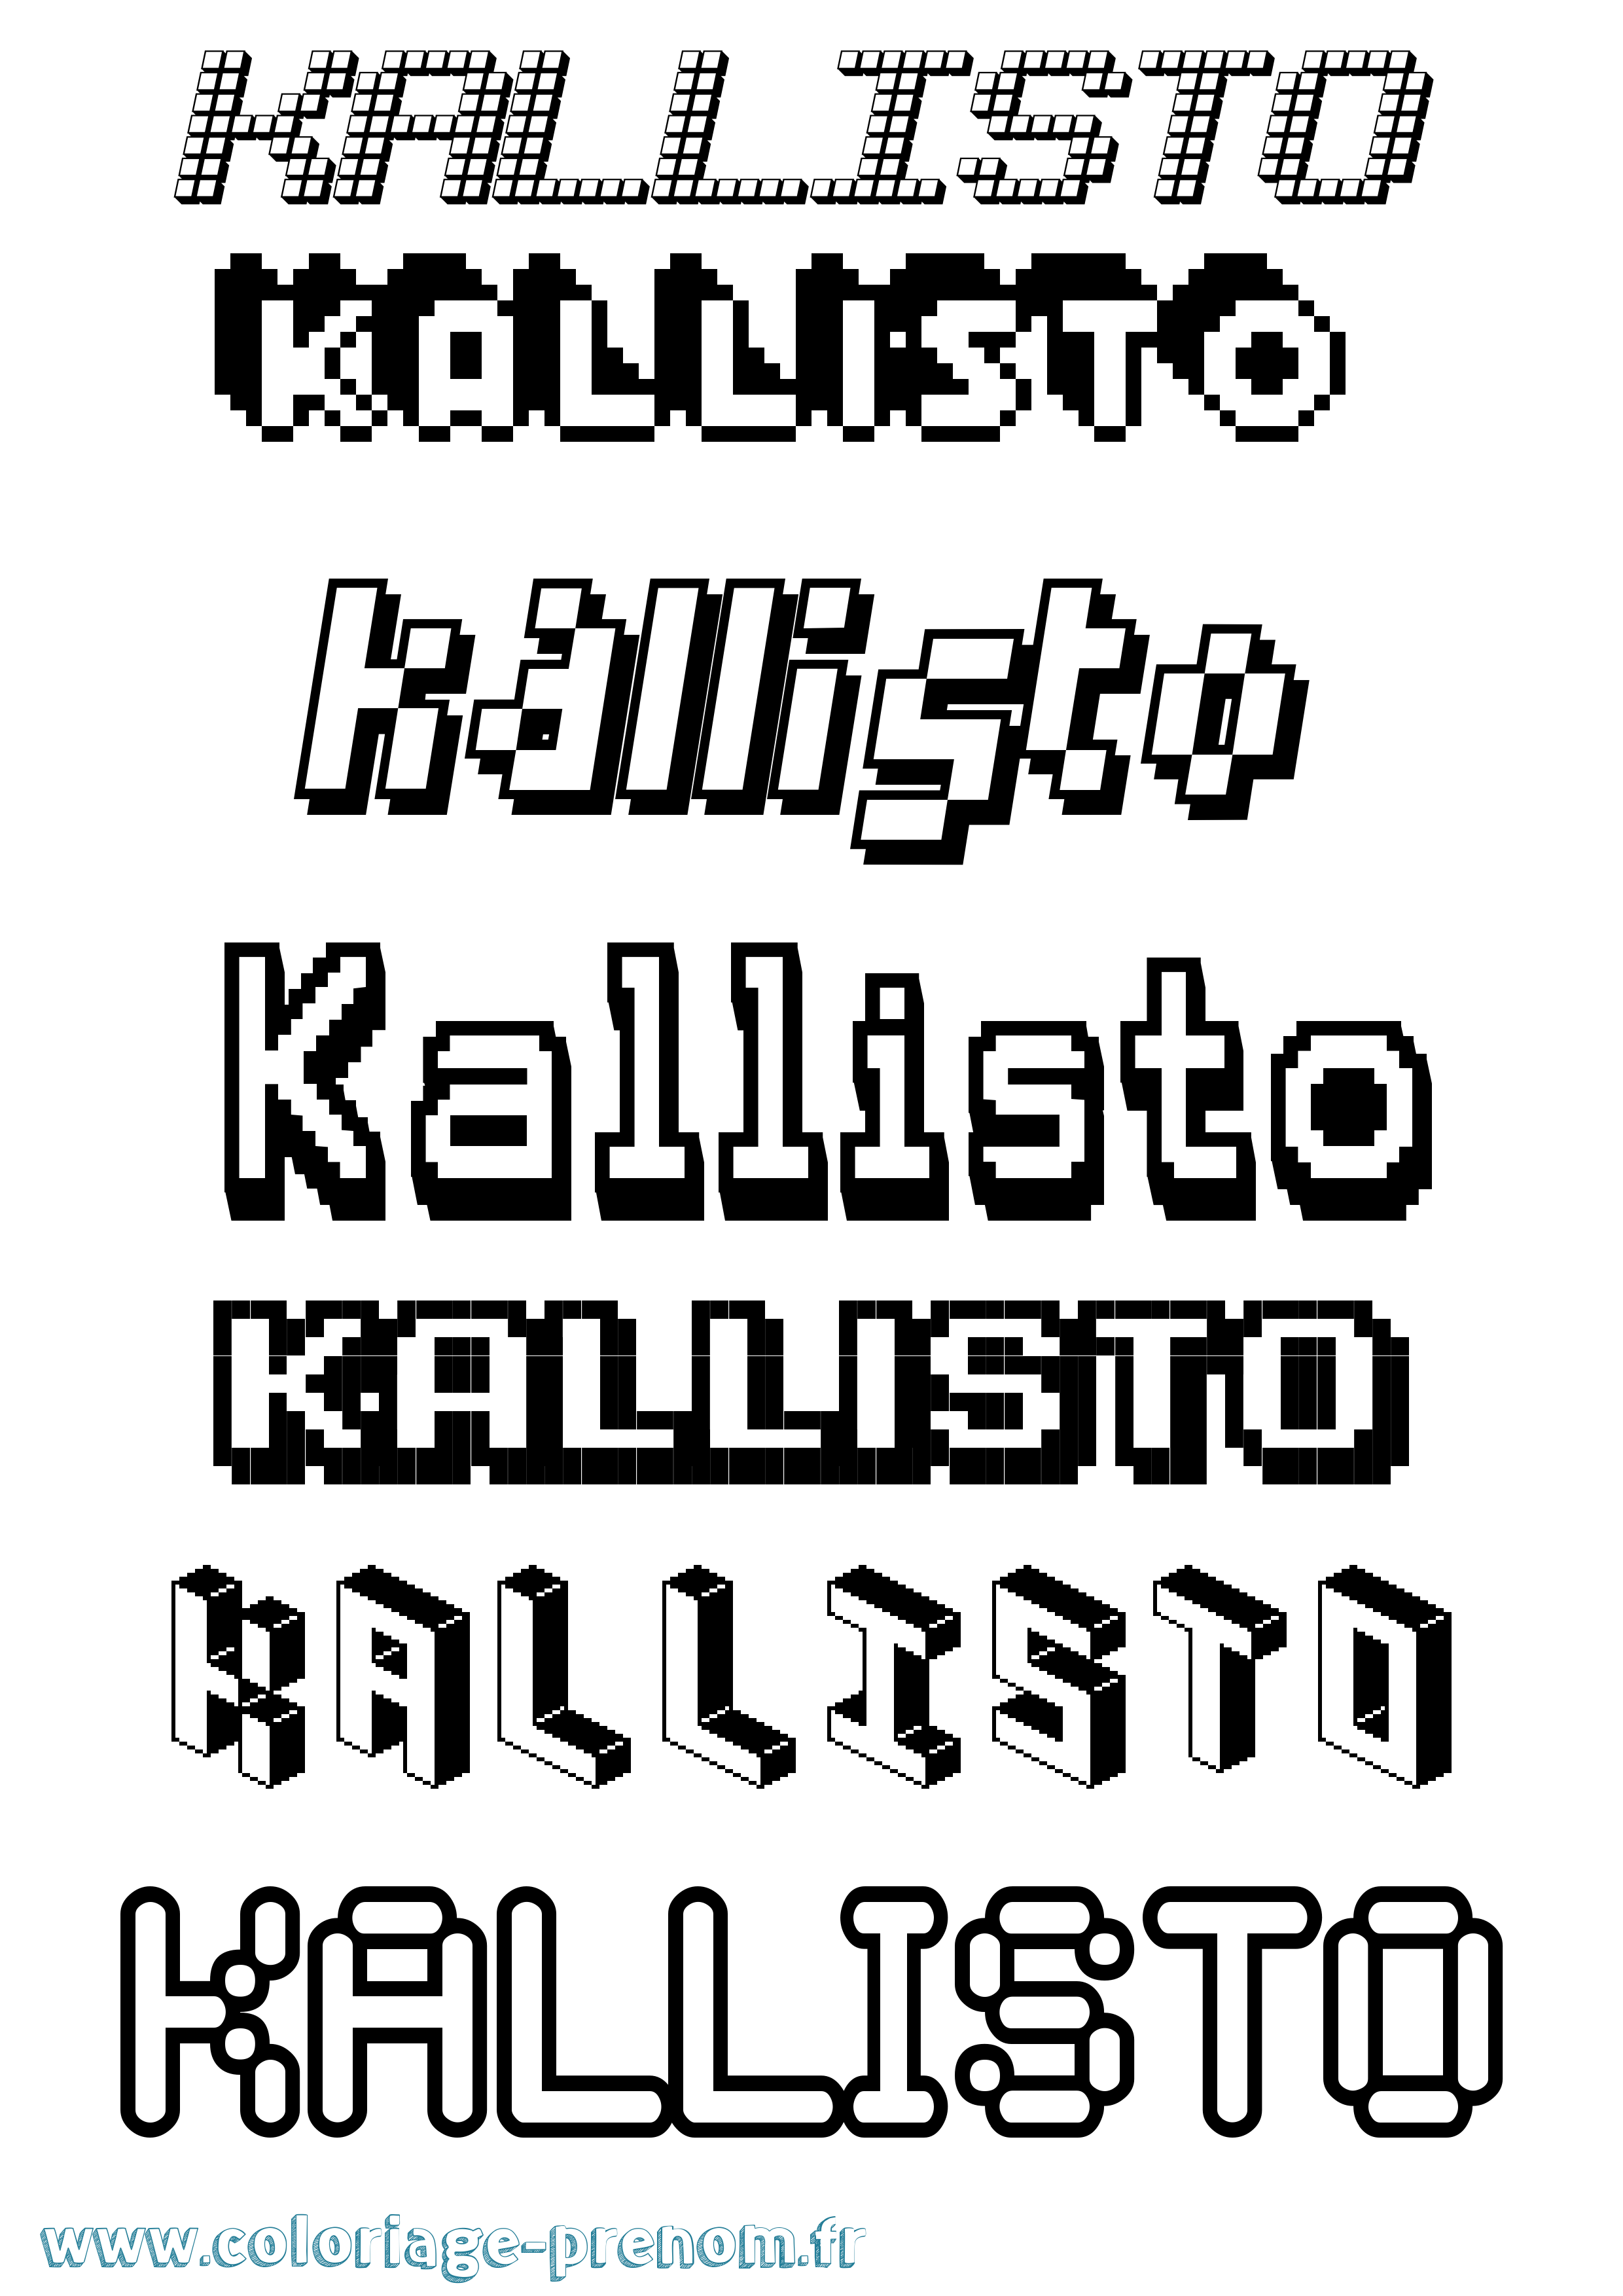 Coloriage prénom Kallisto Pixel